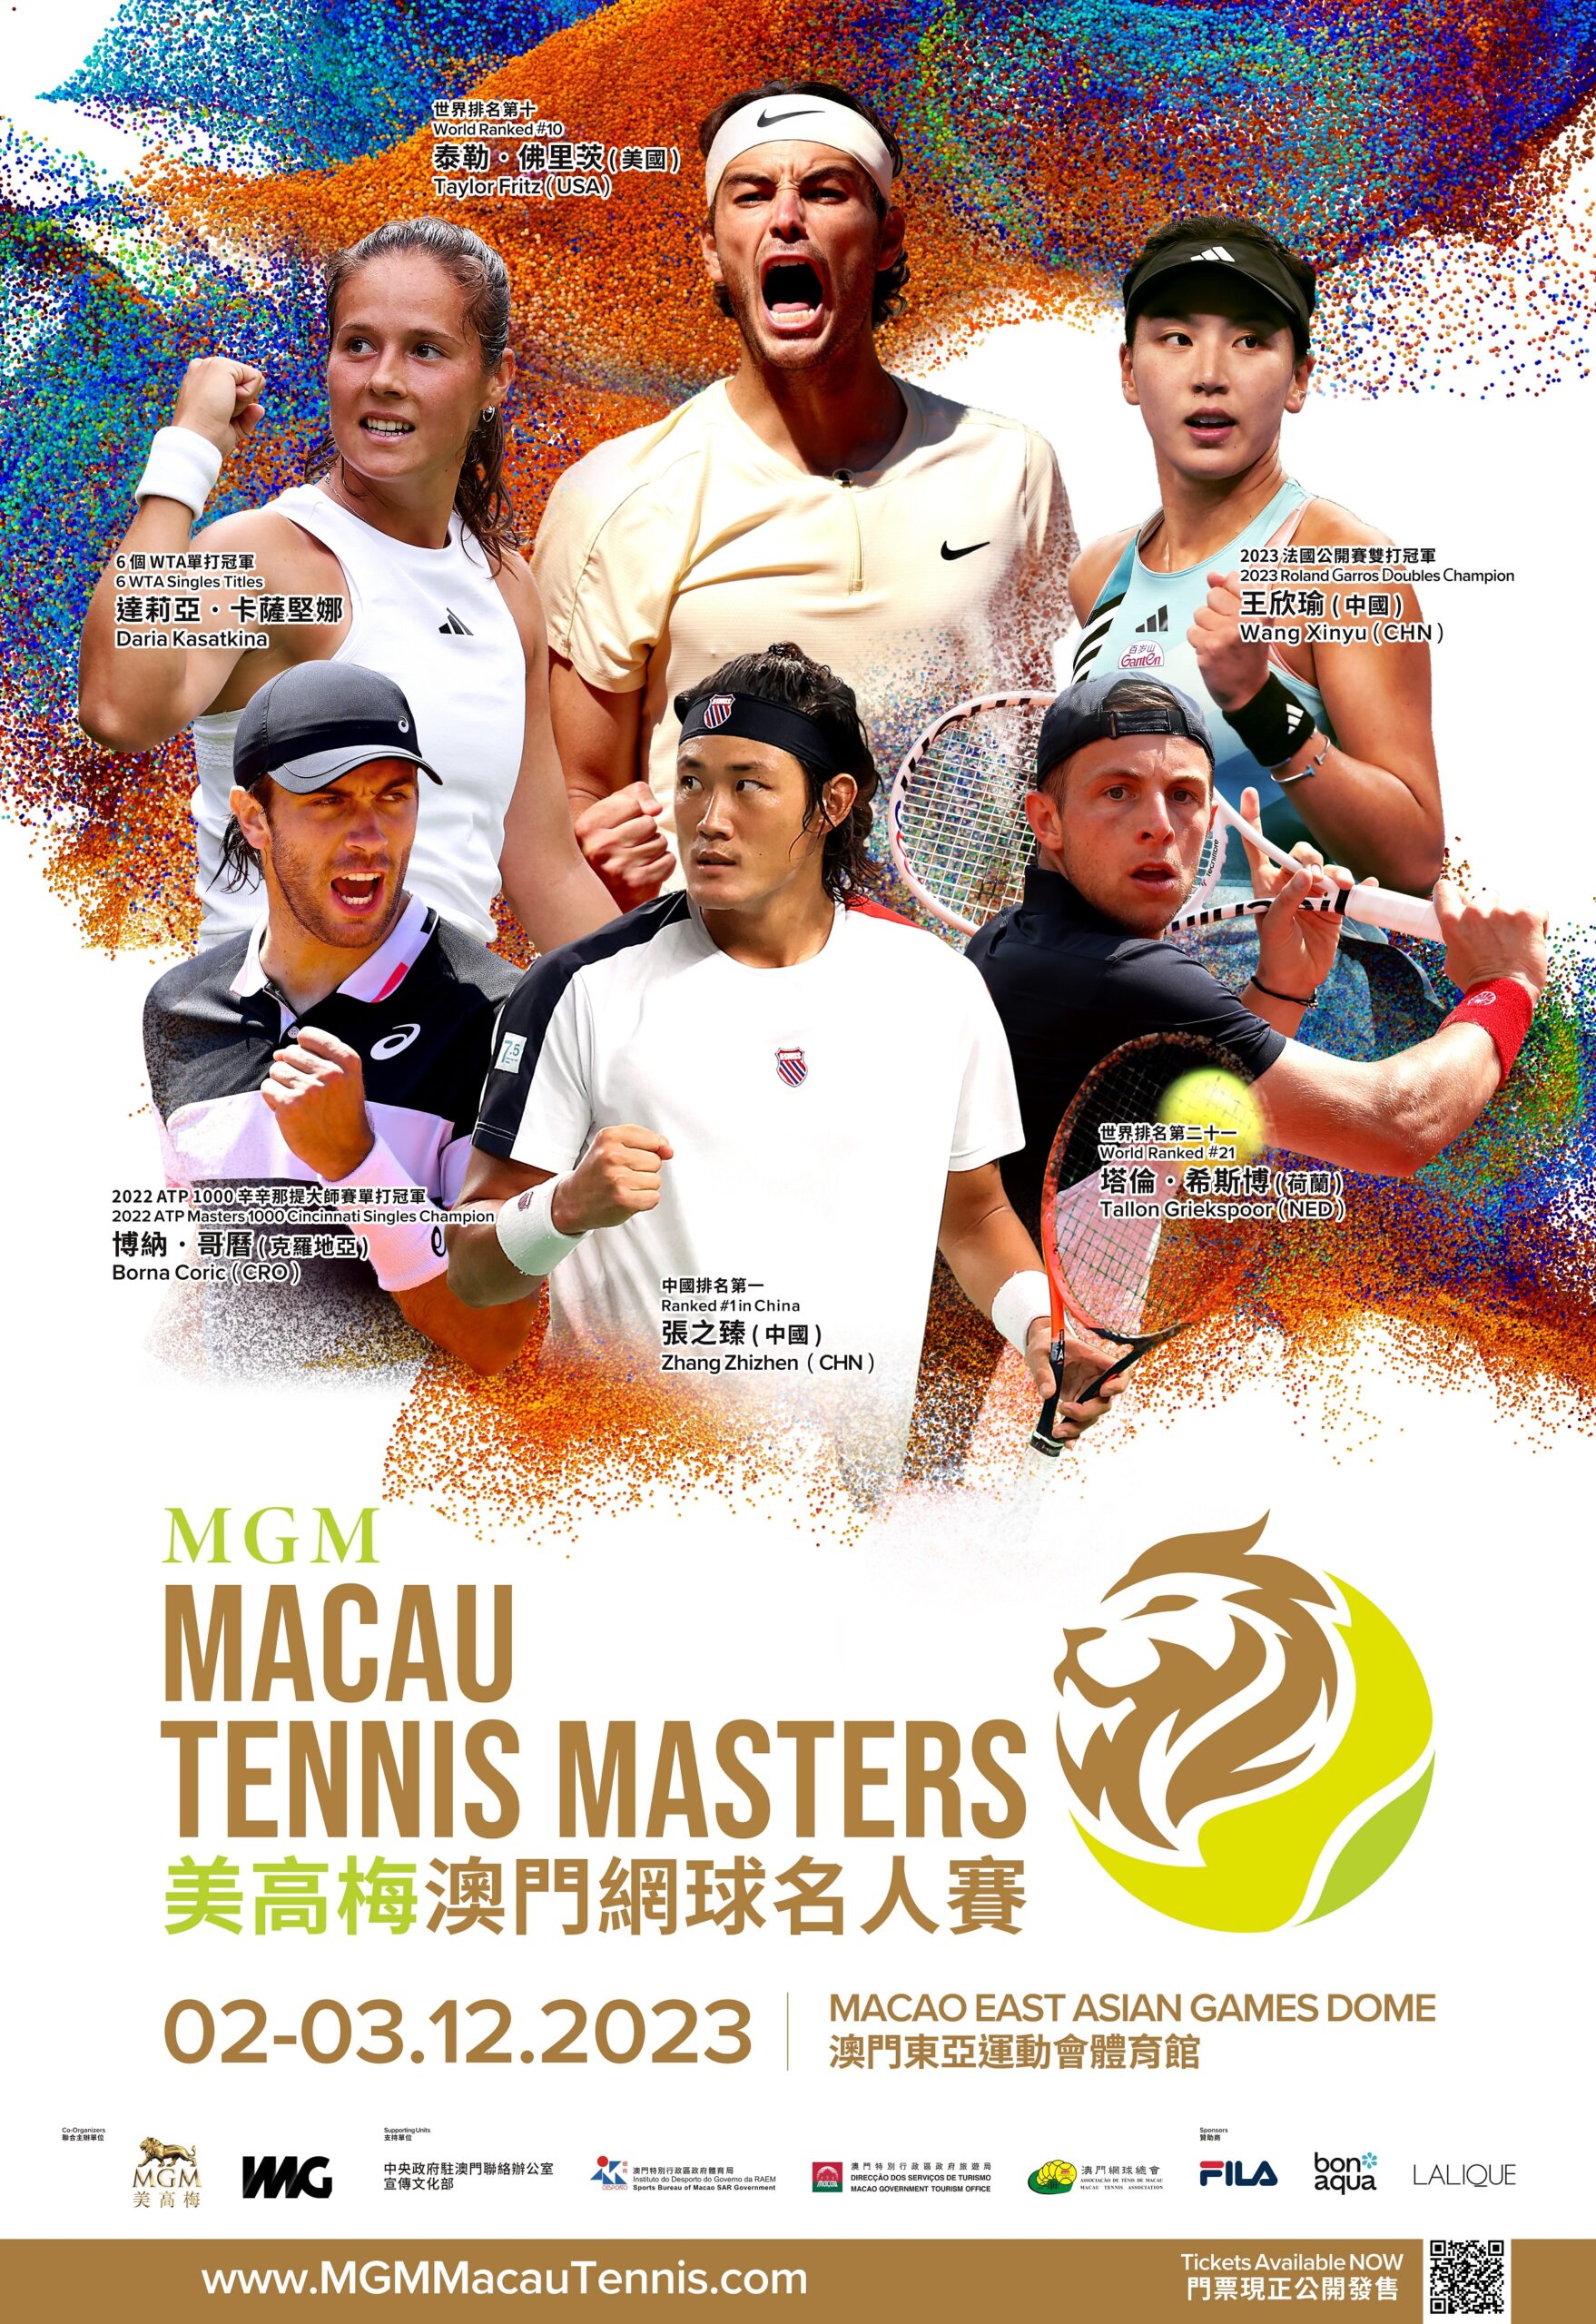 Fritz, Griekspoor And Kasatkina Lead LineUp For MGM Macau Tennis